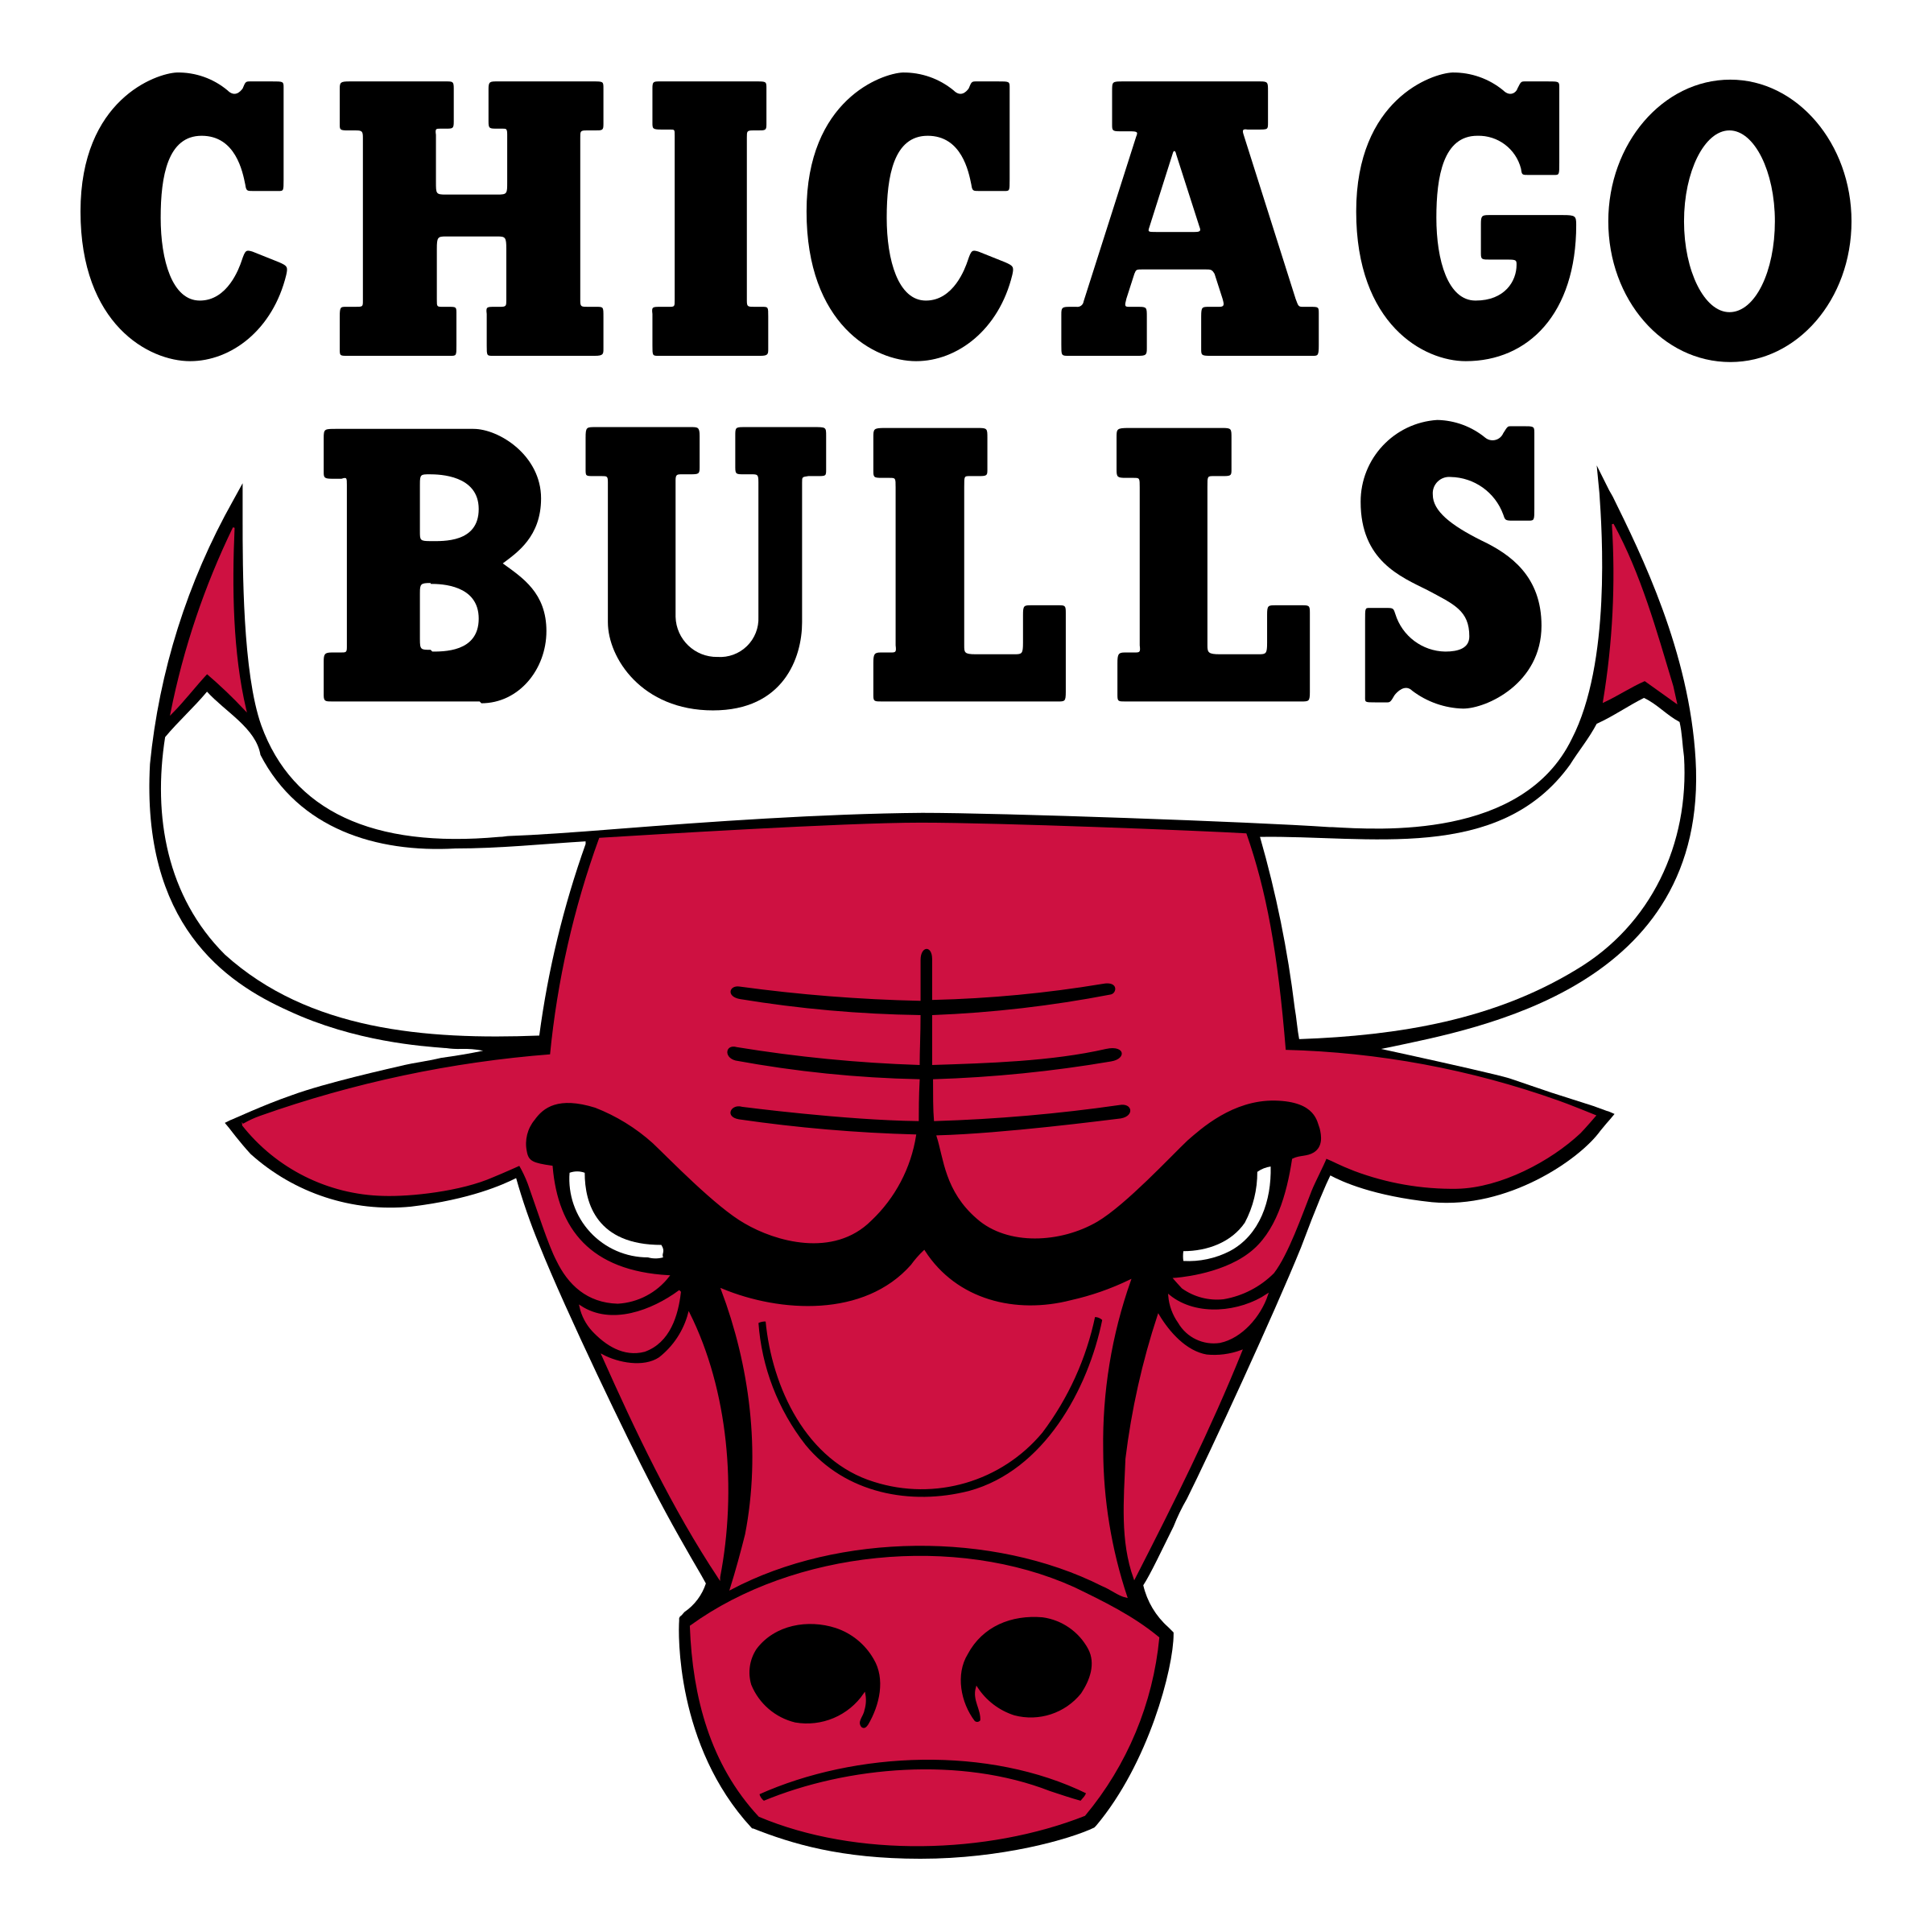 Bulls Logo - Chicago Bulls Logo PNG Transparent & SVG Vector - Freebie Supply